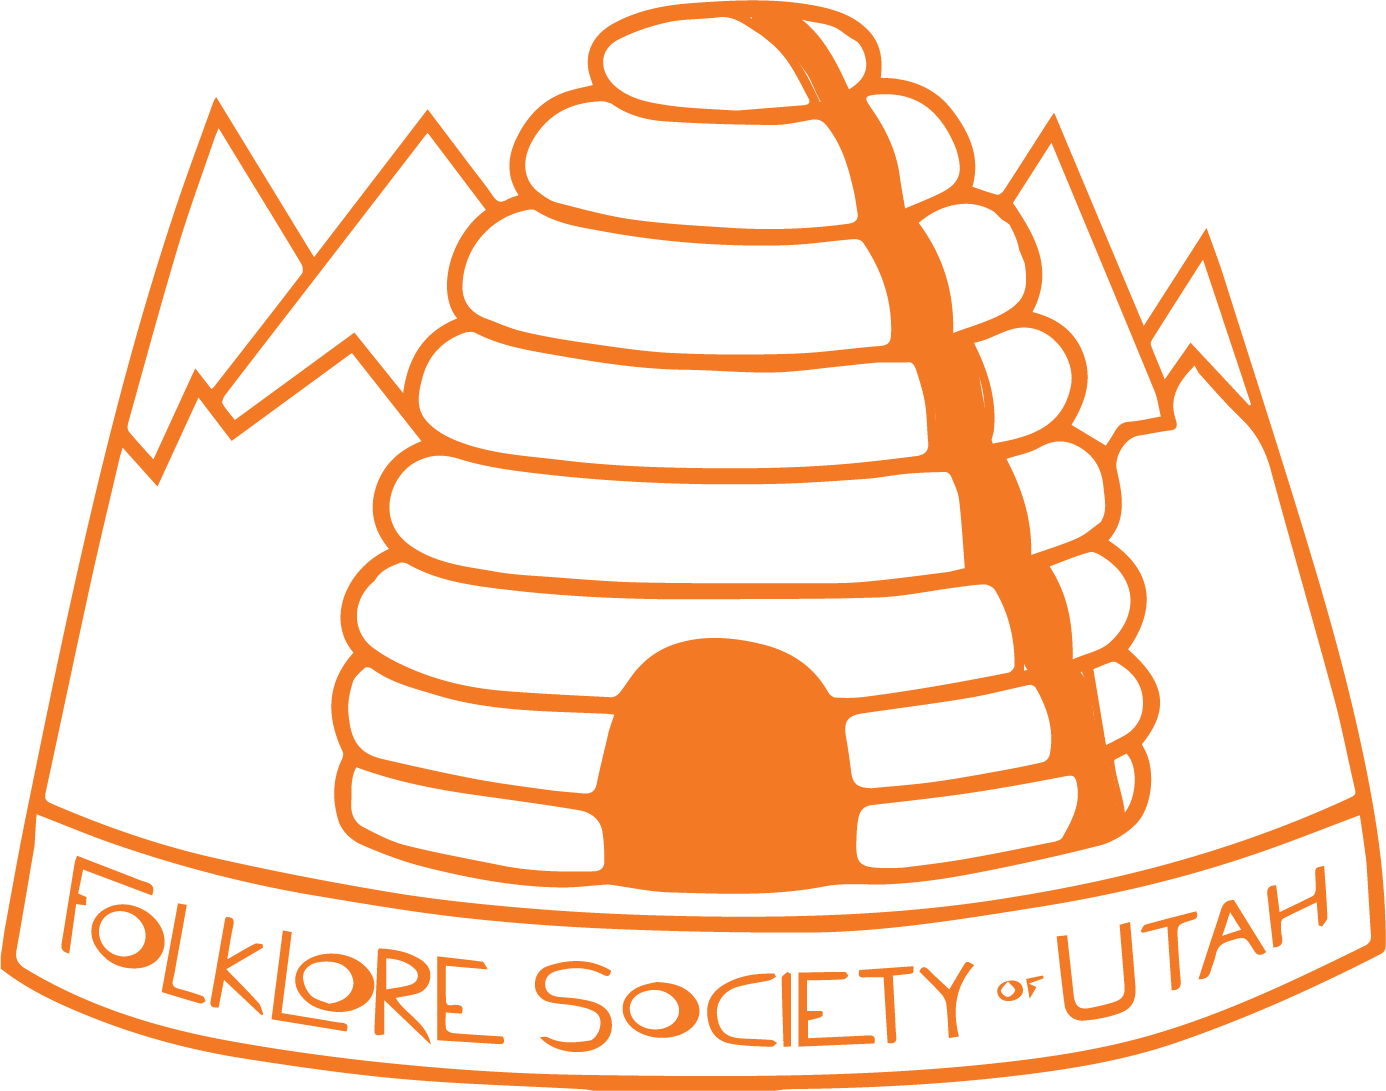 Folklore Society of Utah